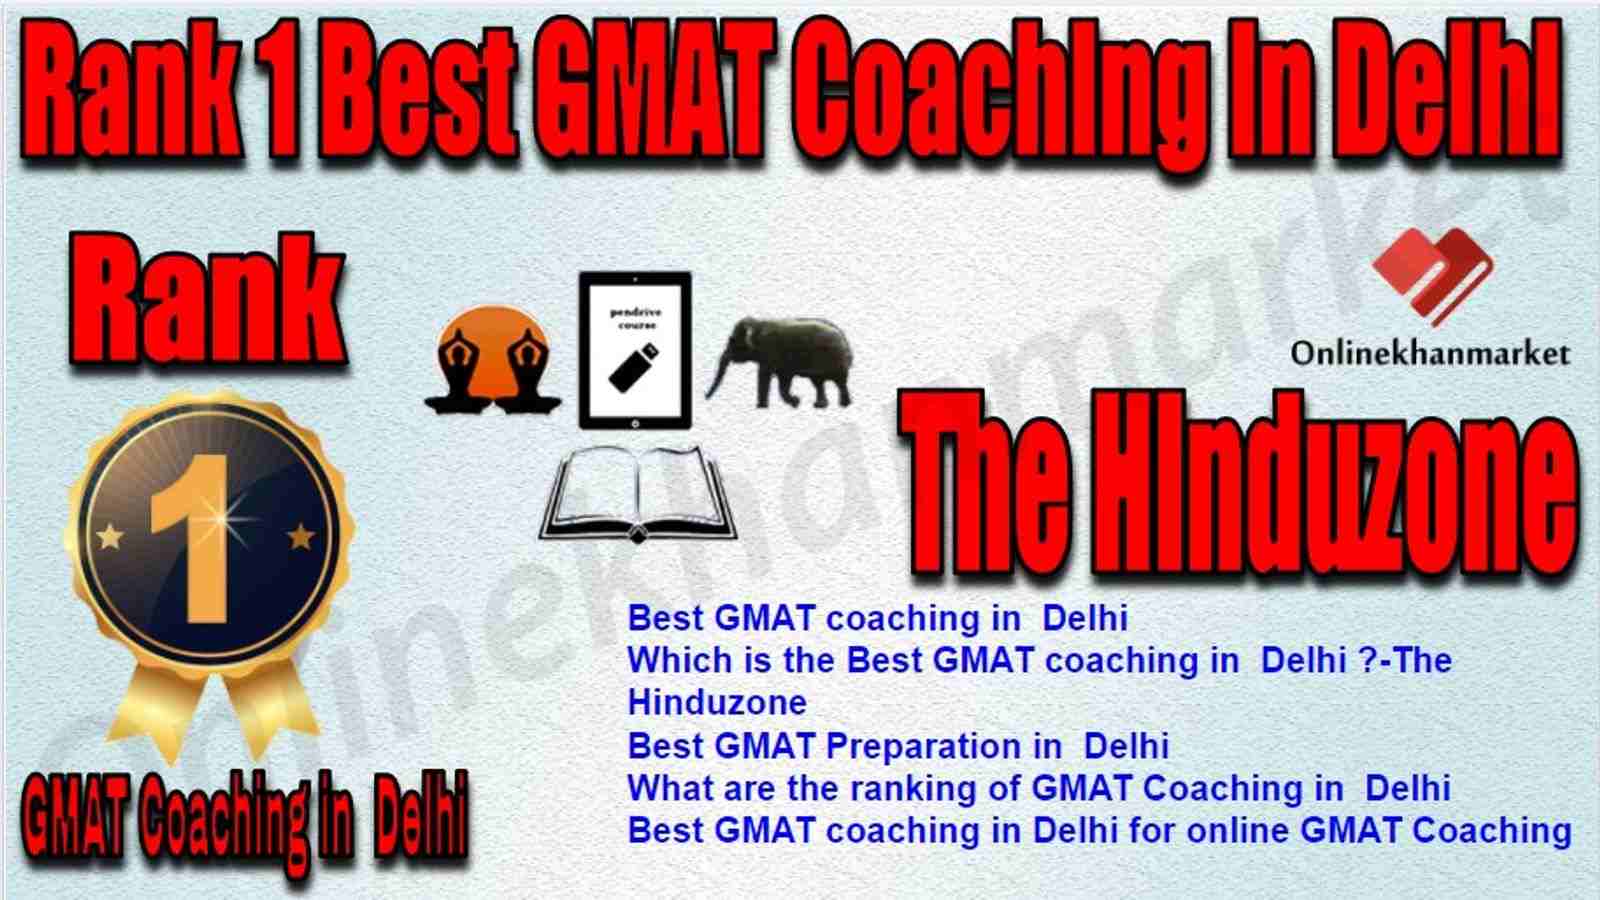 Rank 1 Best GMAT Coaching in Delhi